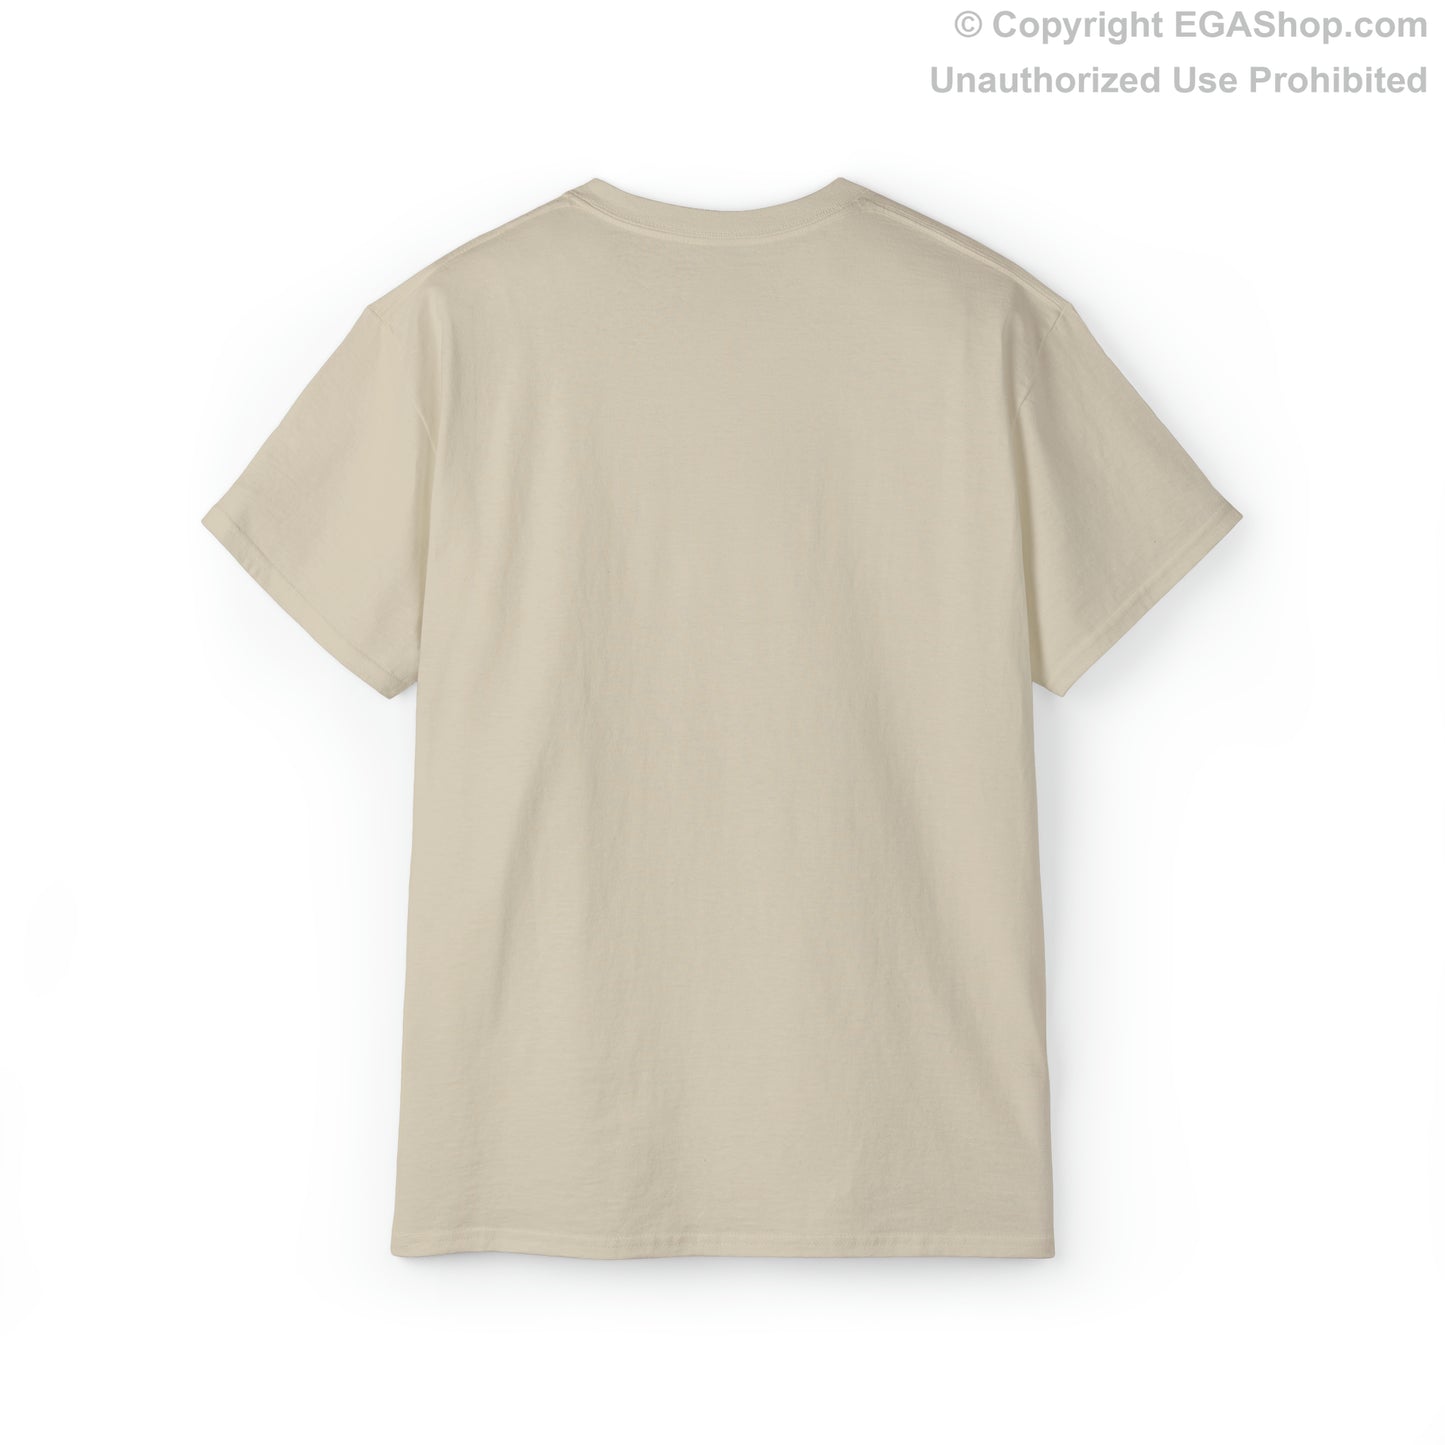 T-Shirt: Lima Co. MCRD Parris Island (EGA, Blank Back)